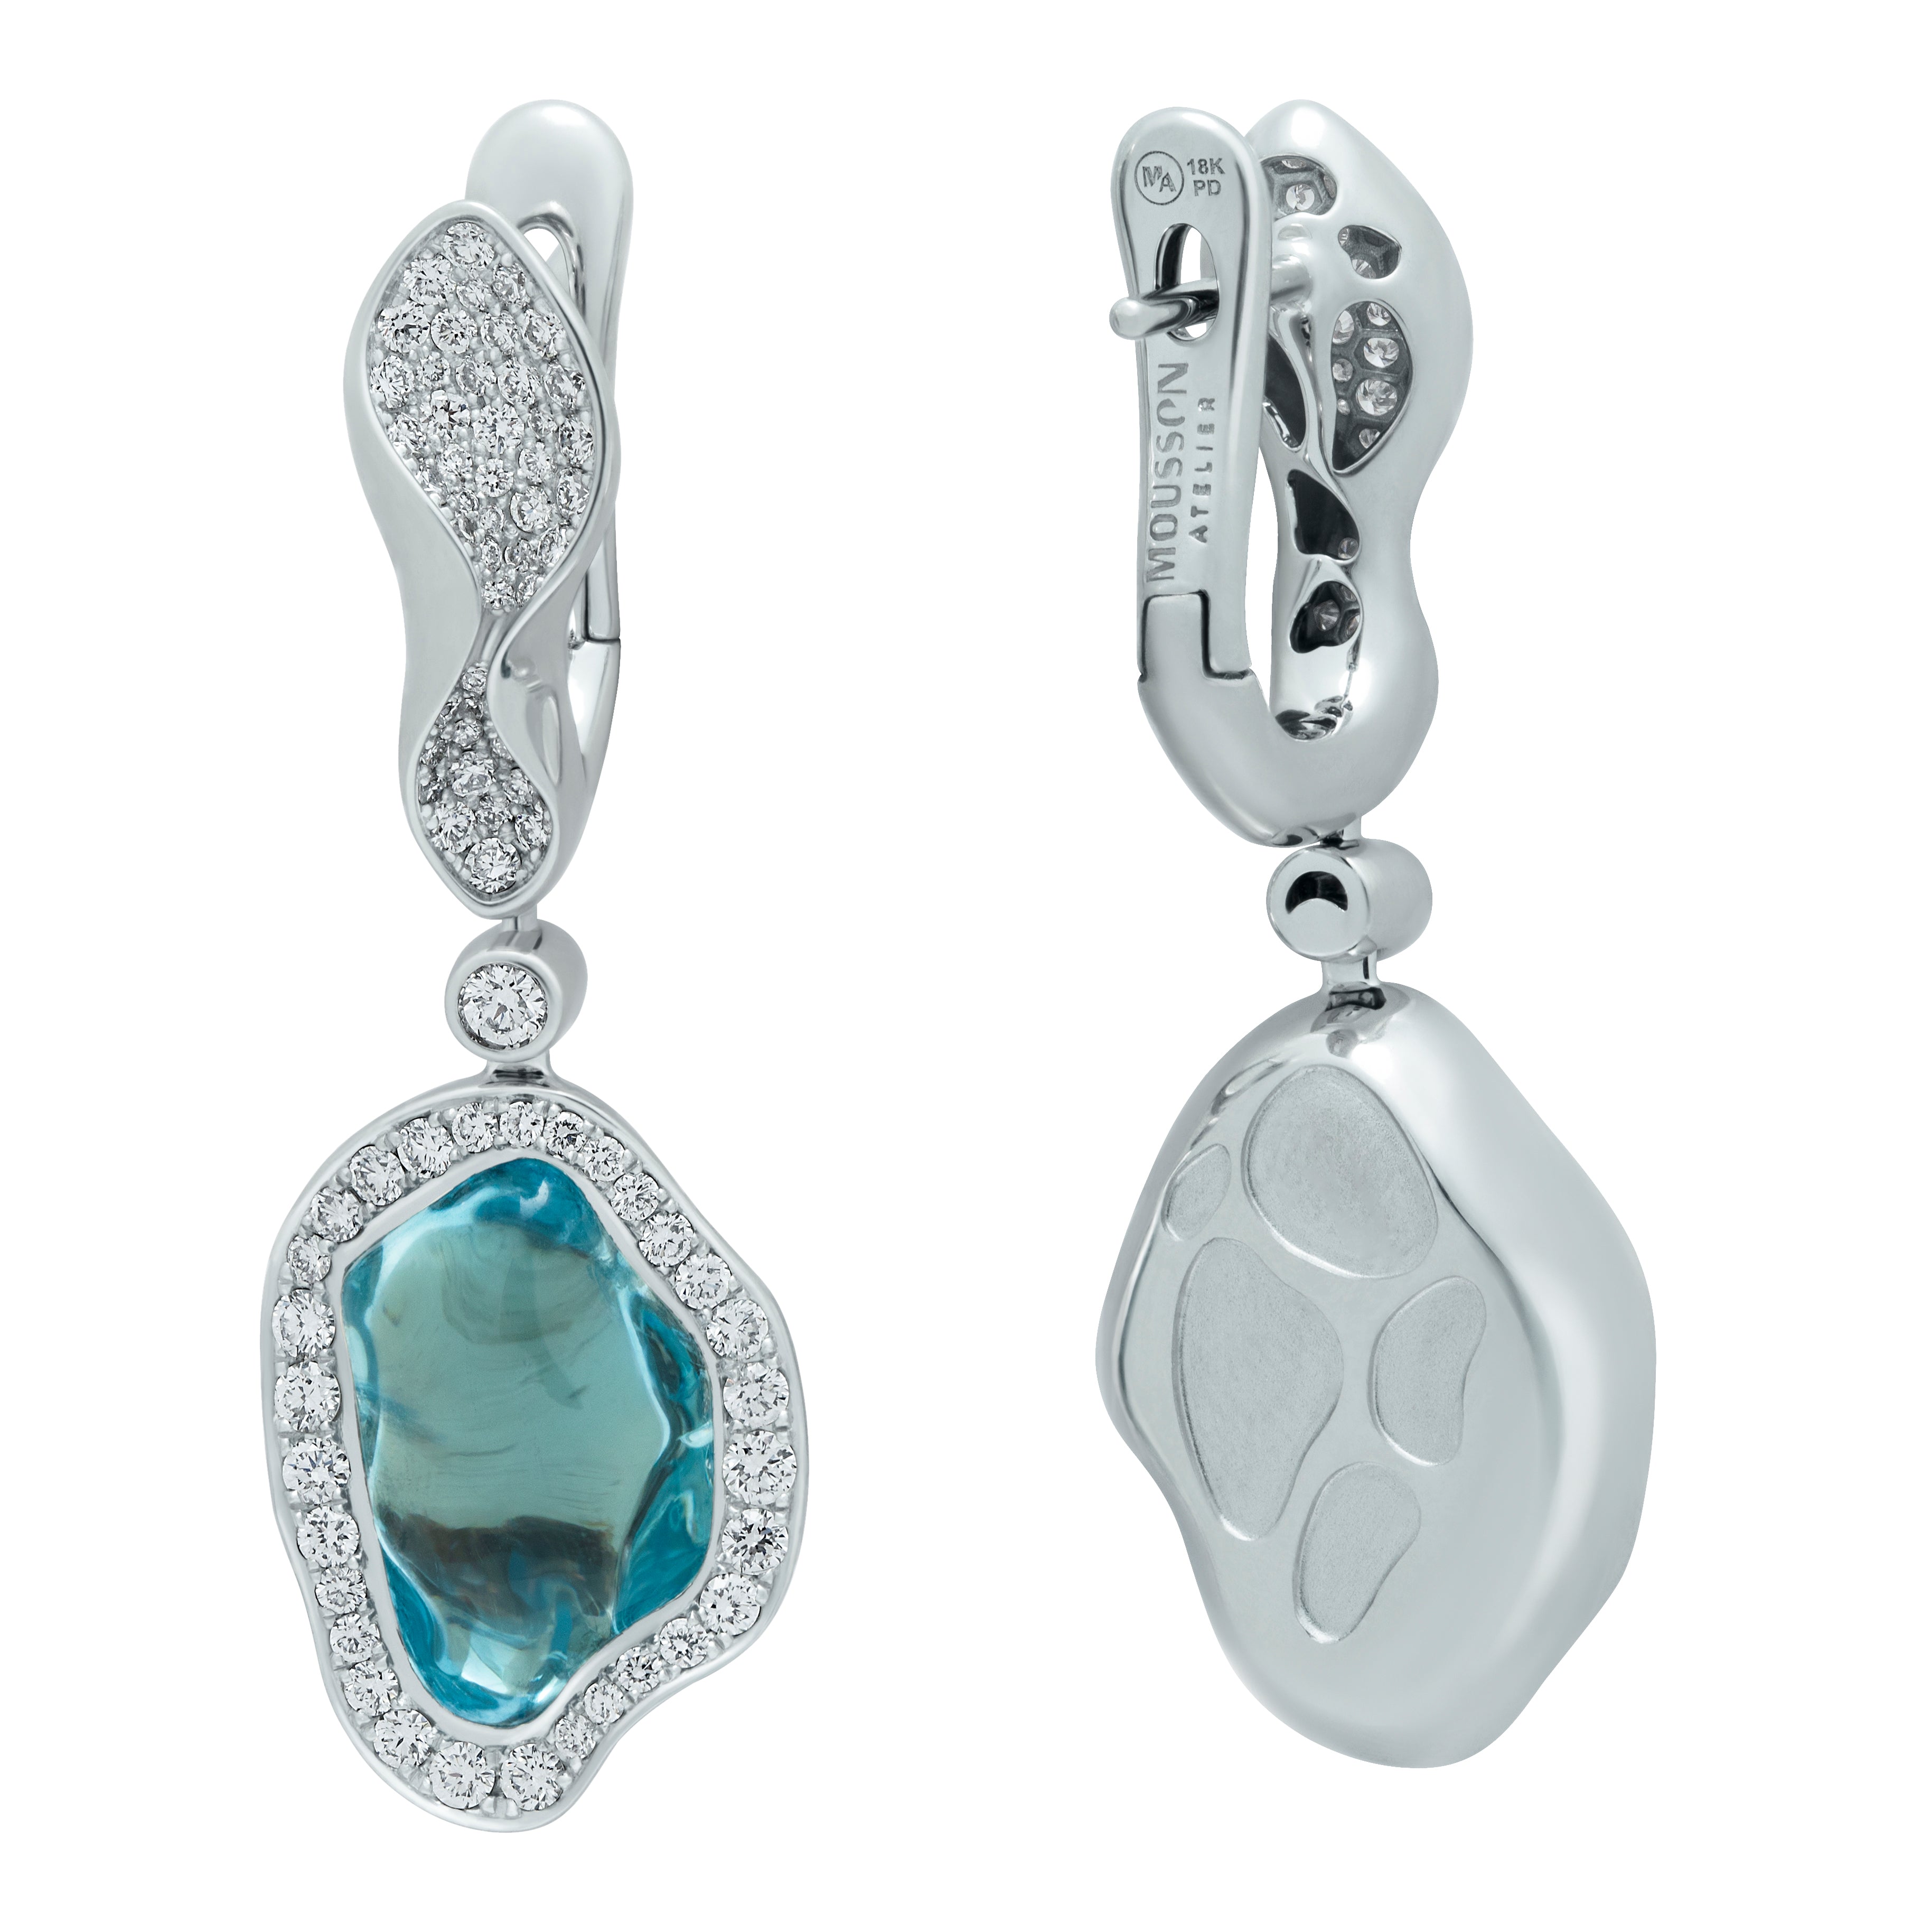 E 0030-5/1 18K White Gold, Aquamarine, Diamonds Earrings